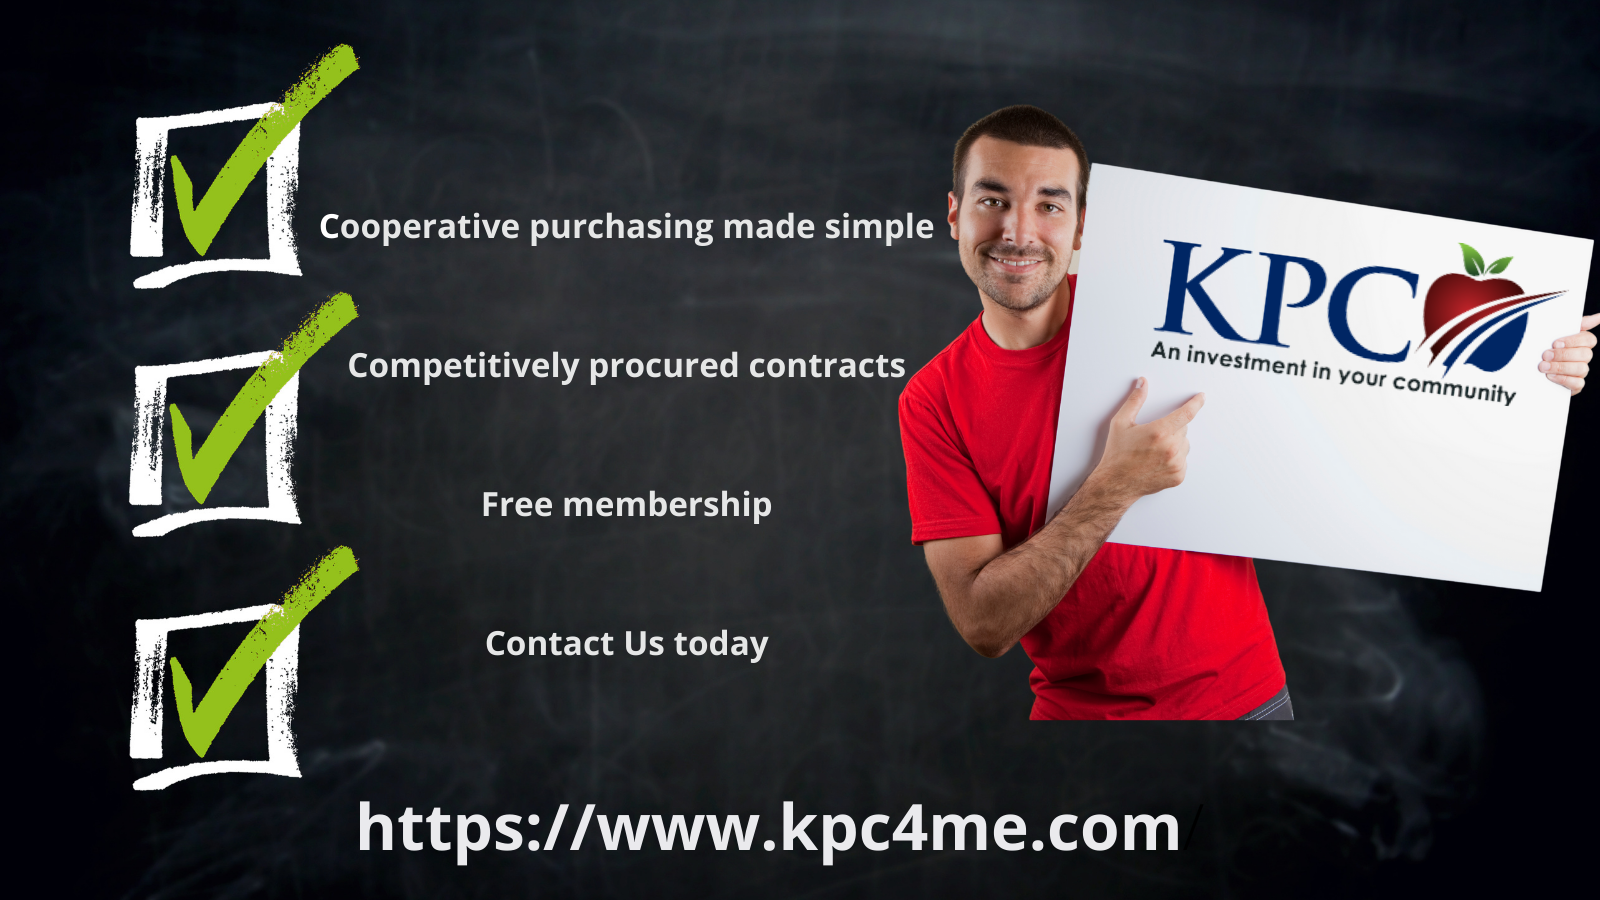 Man holding KPC logo